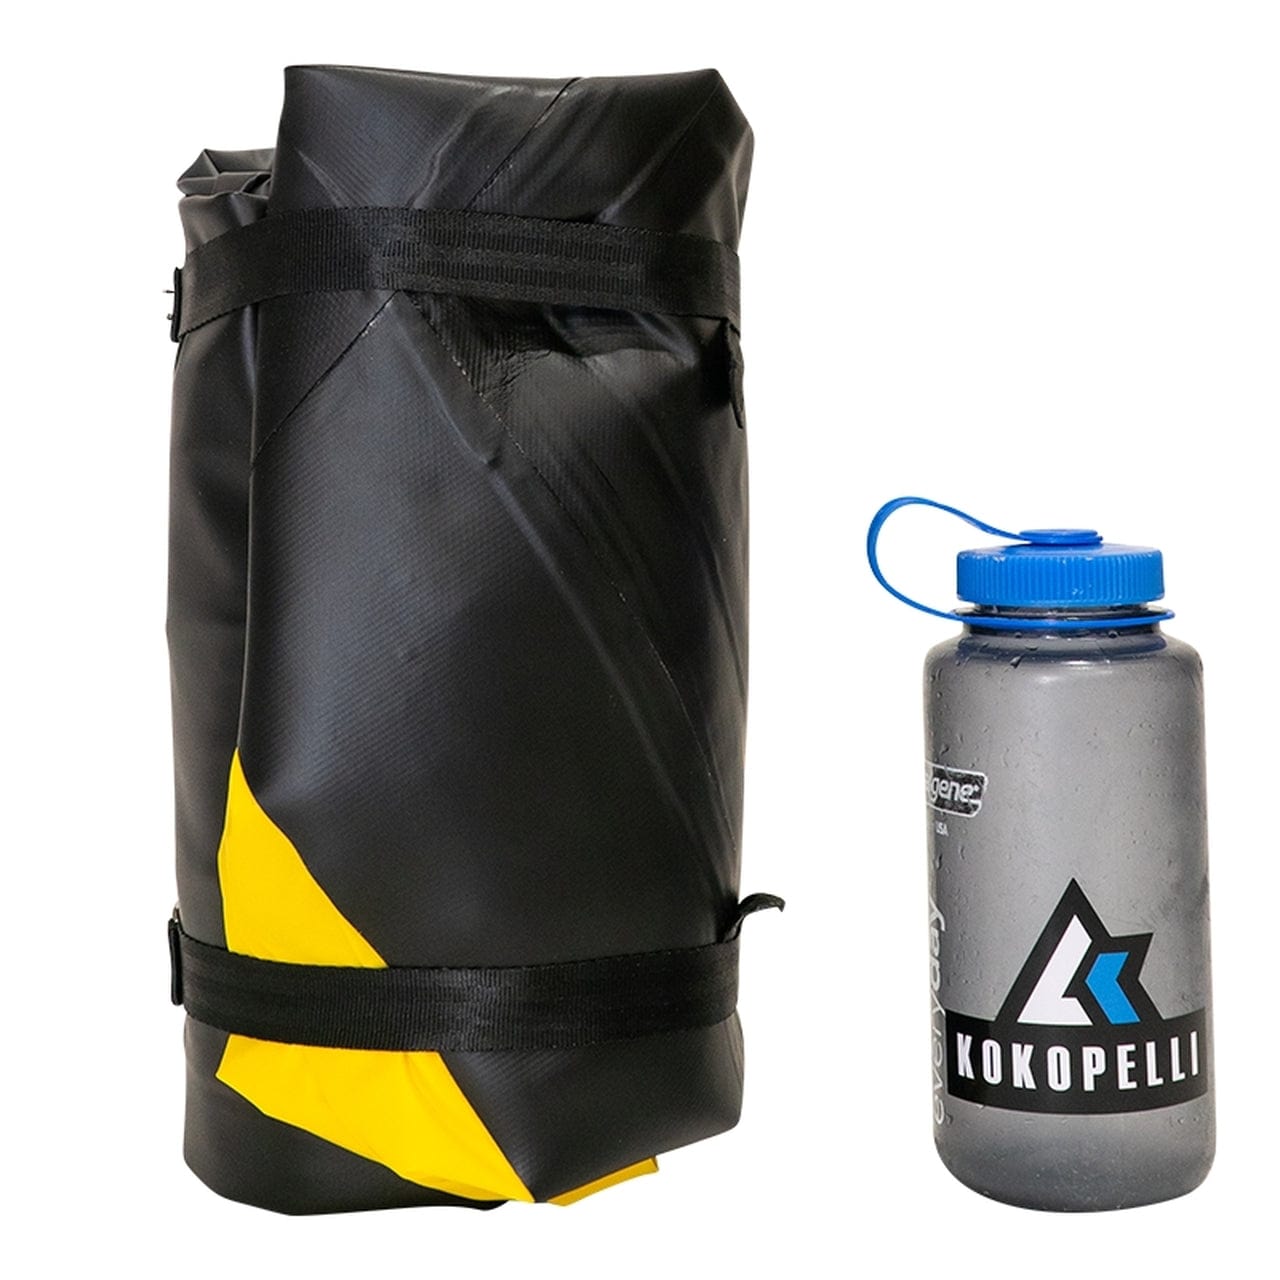 Kokopelli Nirvana Inflatable Packraft - Spraydeck Whitewater (Yellow) - Good Wave Australia